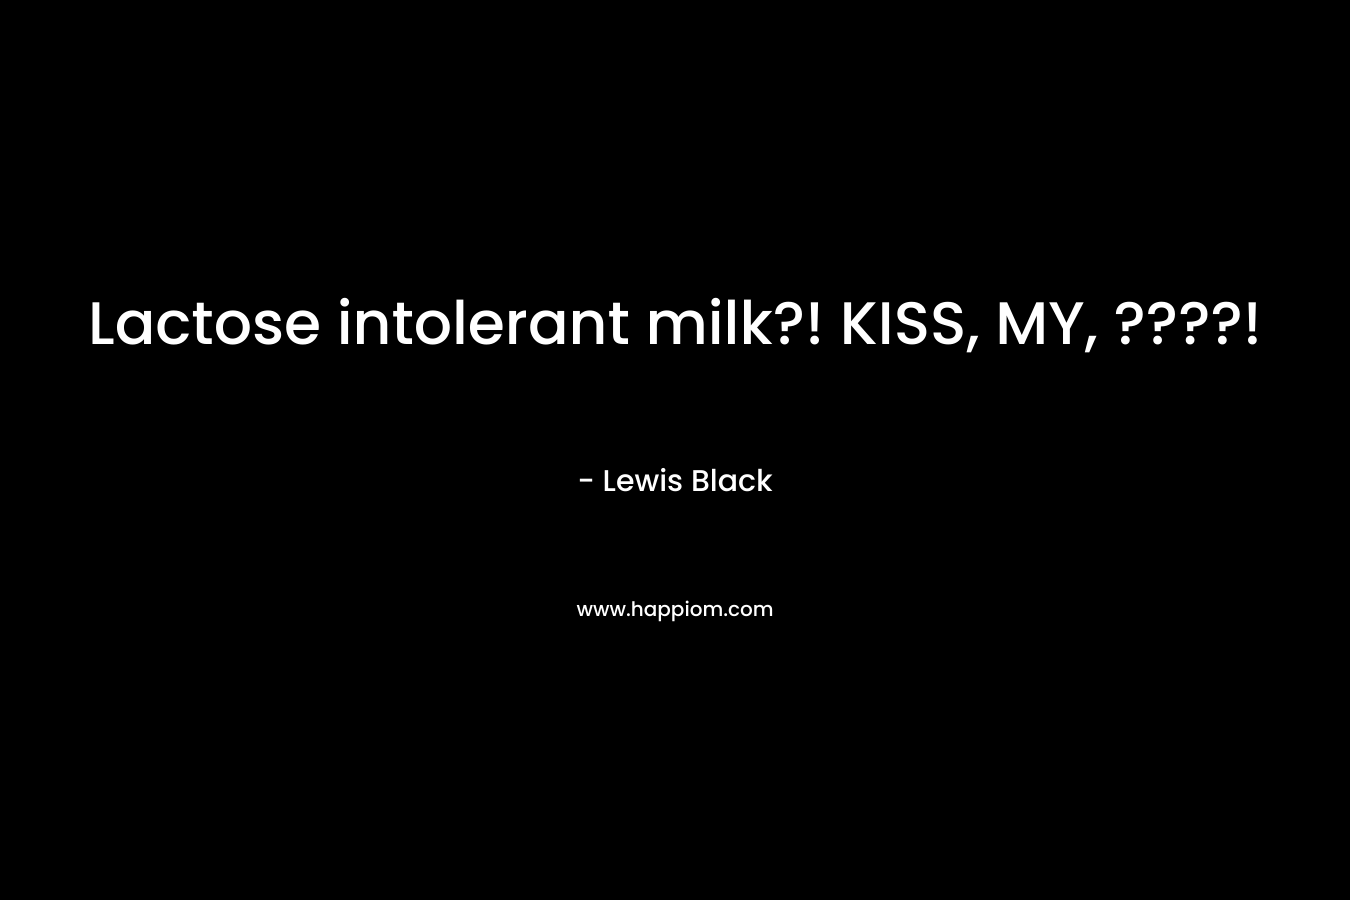 Lactose intolerant milk?! KISS, MY, ????!